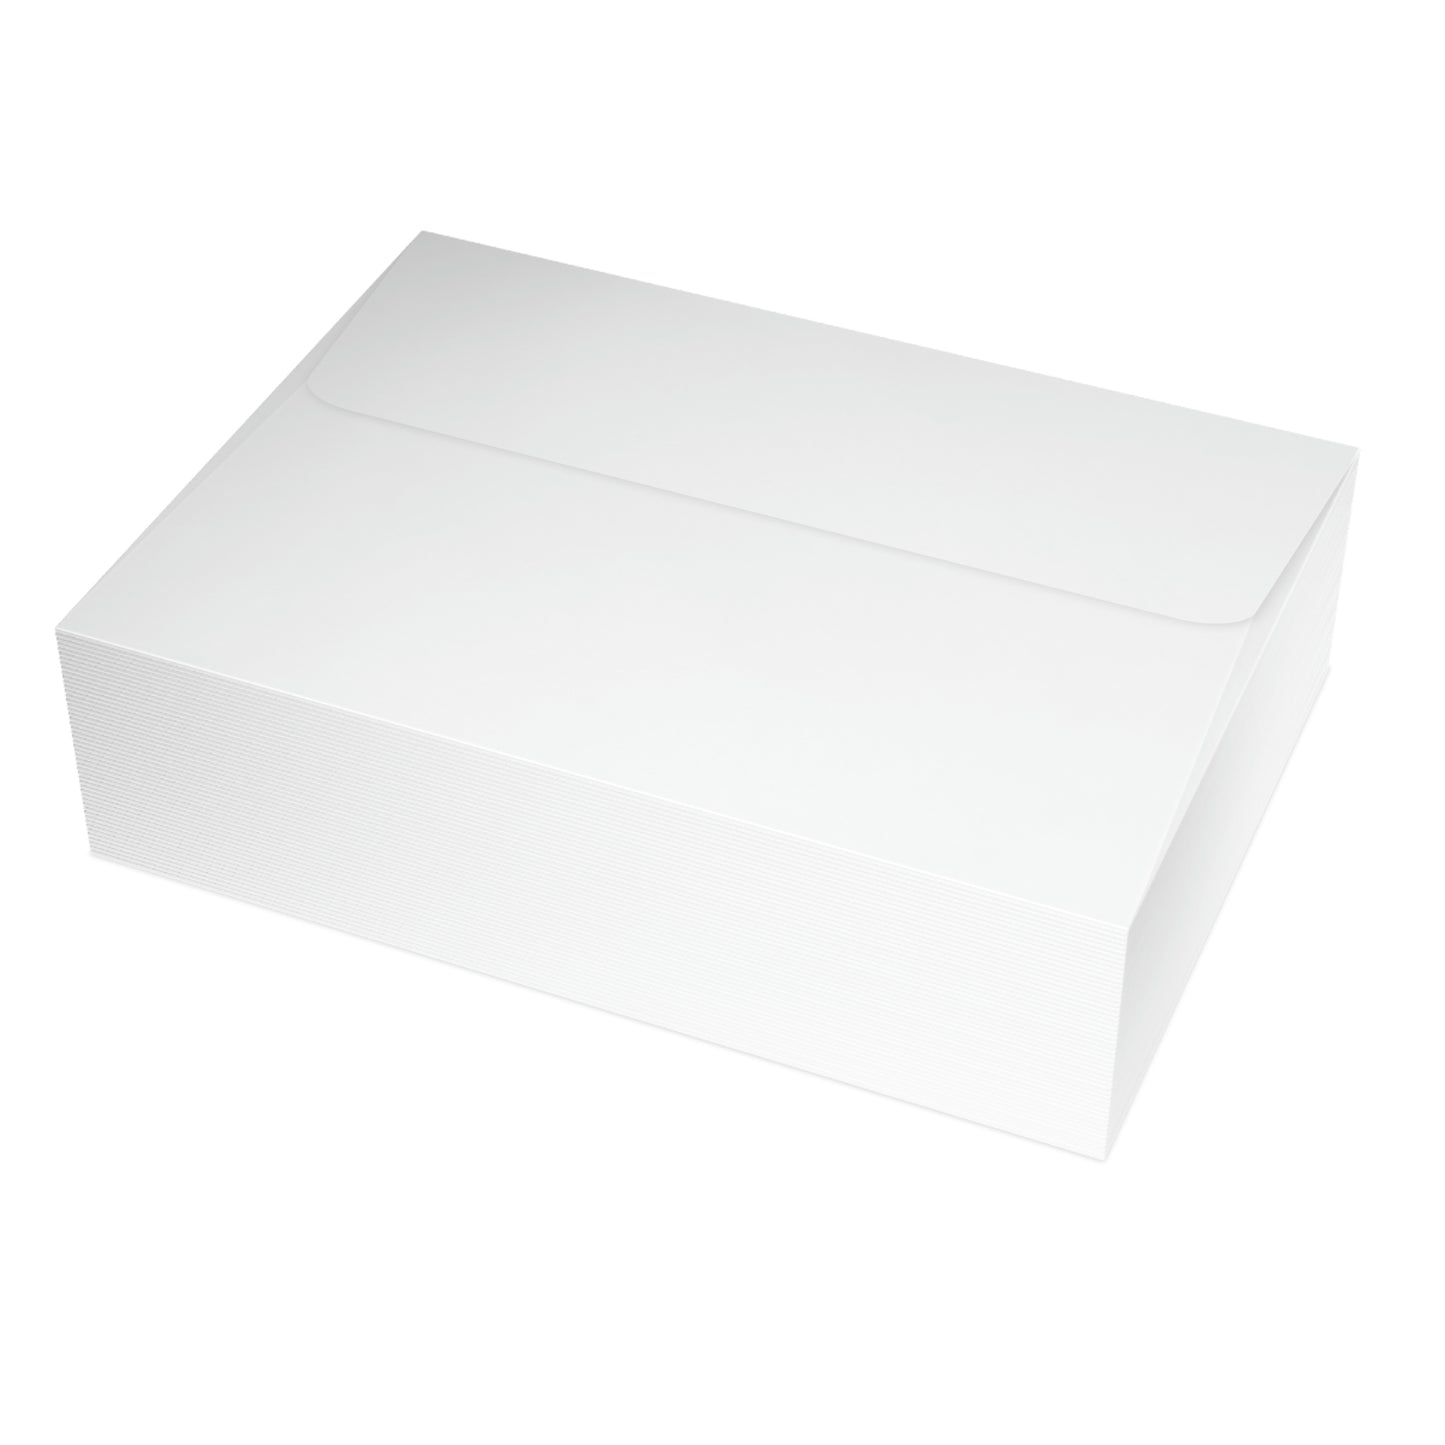 Folded Greeting Cards Horizontal (1, 10, 30, and 50pcs) Calm Down - Design No.1700